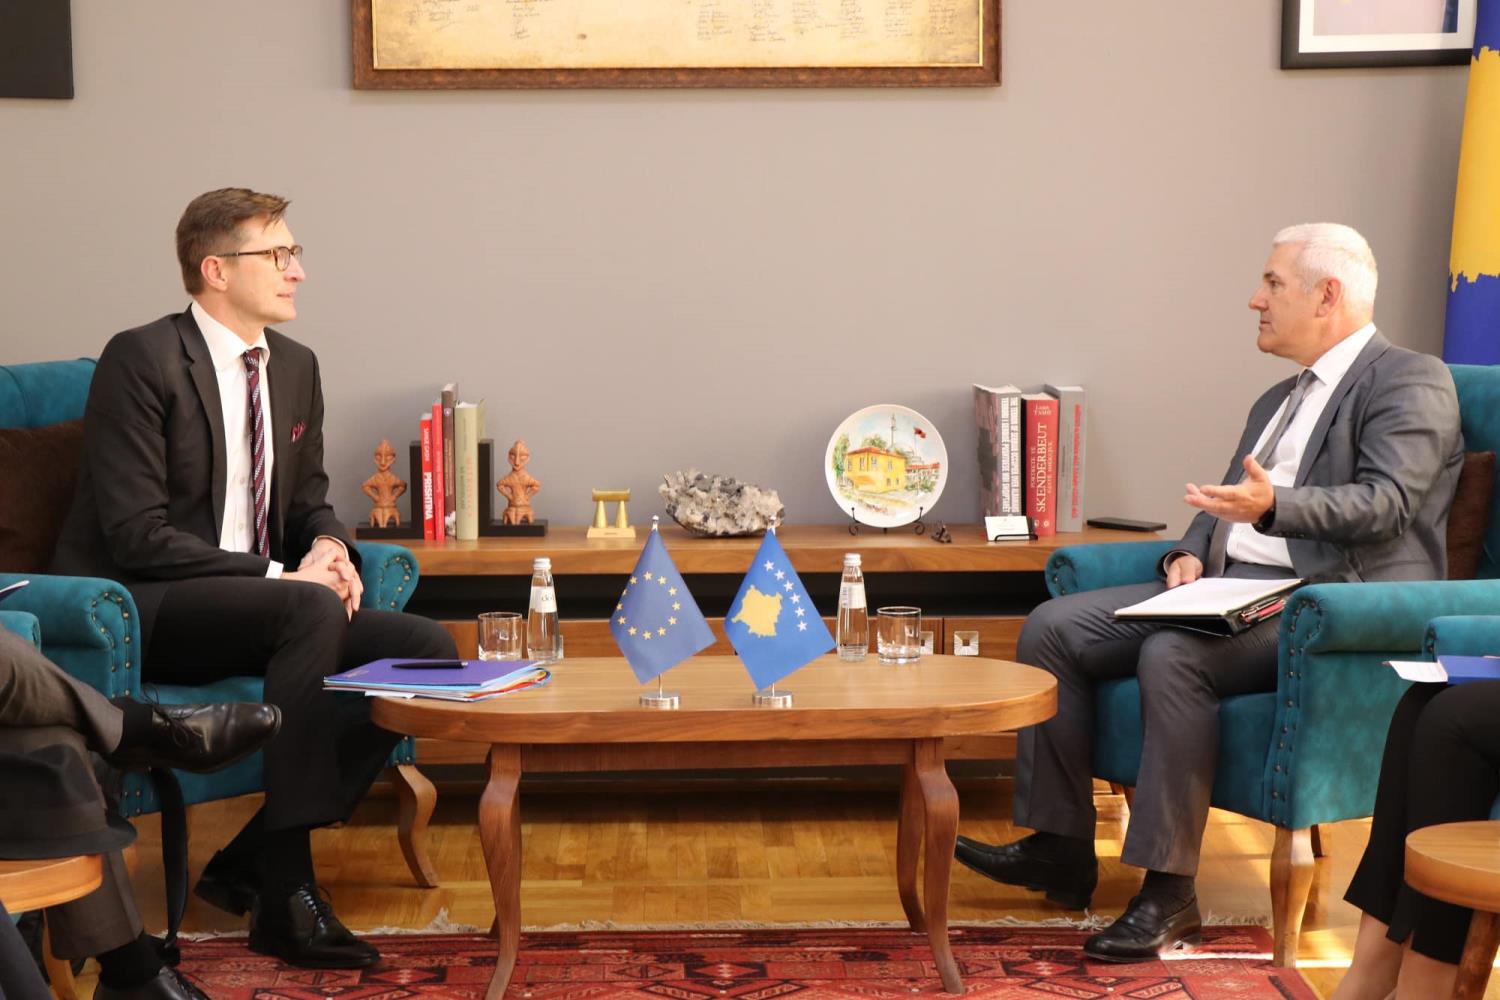 Minister of Internal Affairs, Xhelal Sveçla, received the Deputy Managing Director of EU’s European External Action Service (EEAS), Marko Makovec, and the EU Ambassador to Kosovo Thomas Szunyog